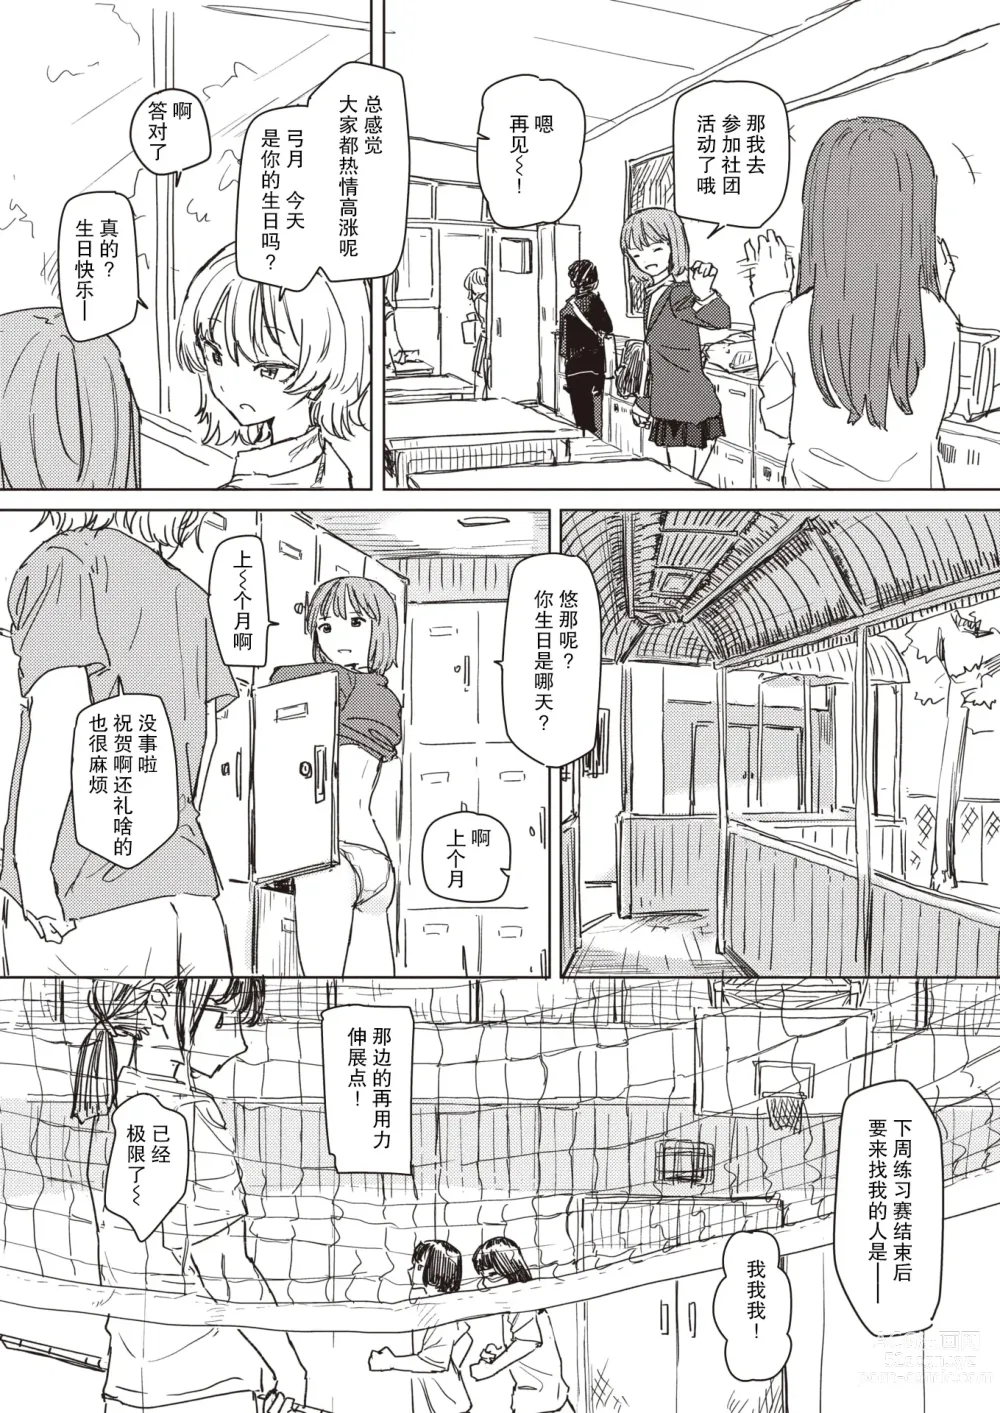 Page 6 of manga Unhappy Birthday